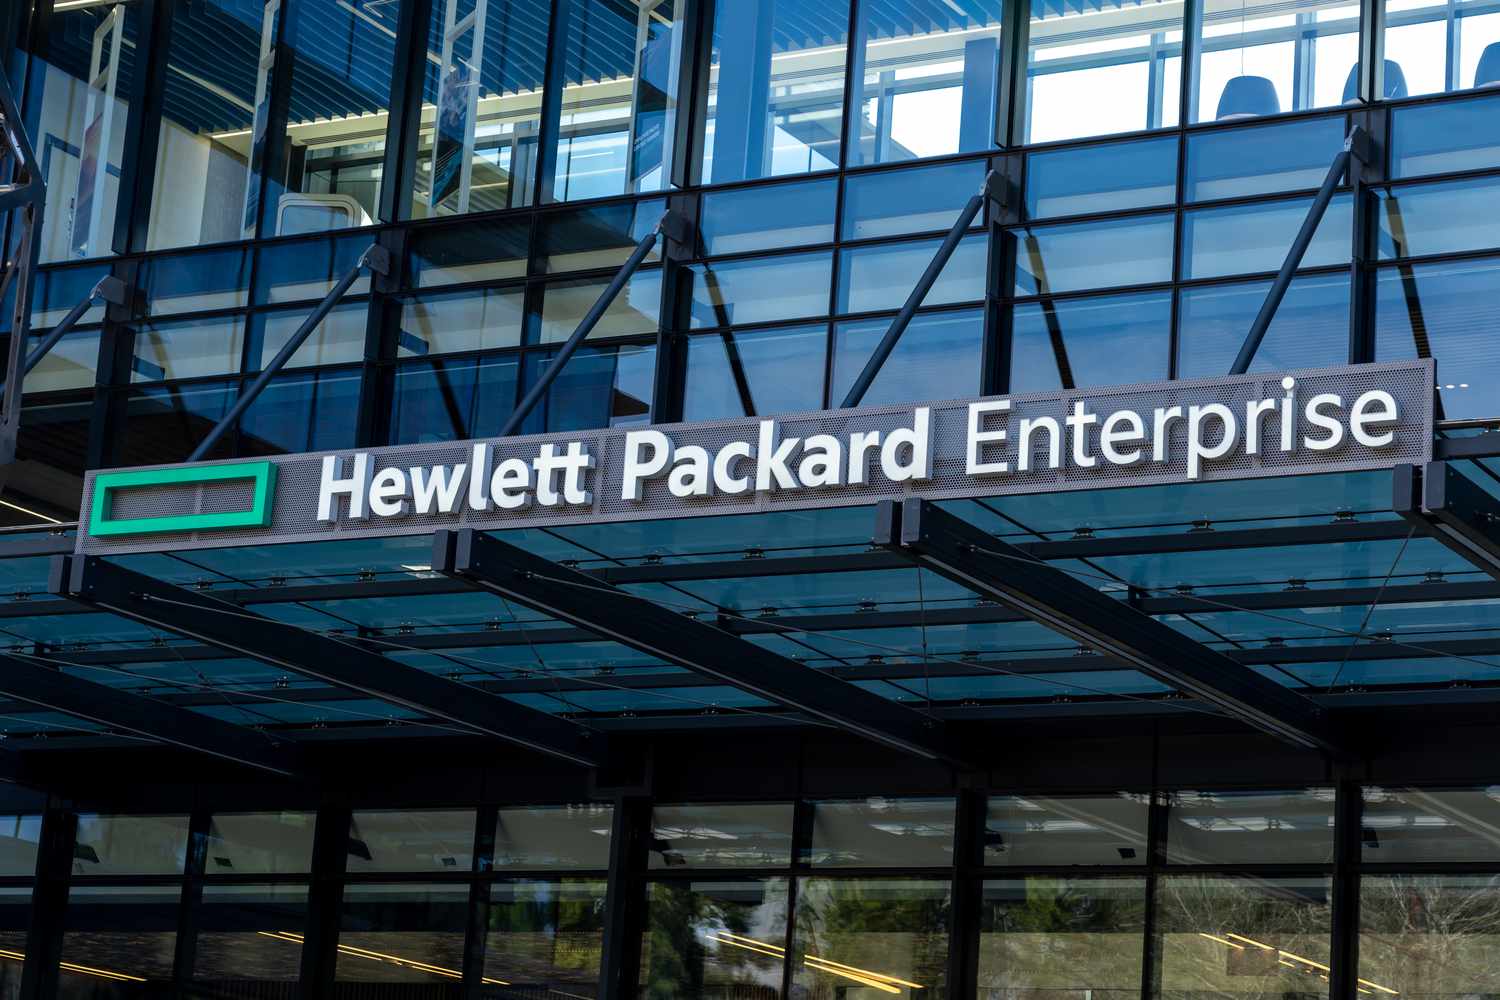  Hewlett Packard Enterprise на шляху до стратегічної угоди: Придбання Juniper Networks за $13 млрд